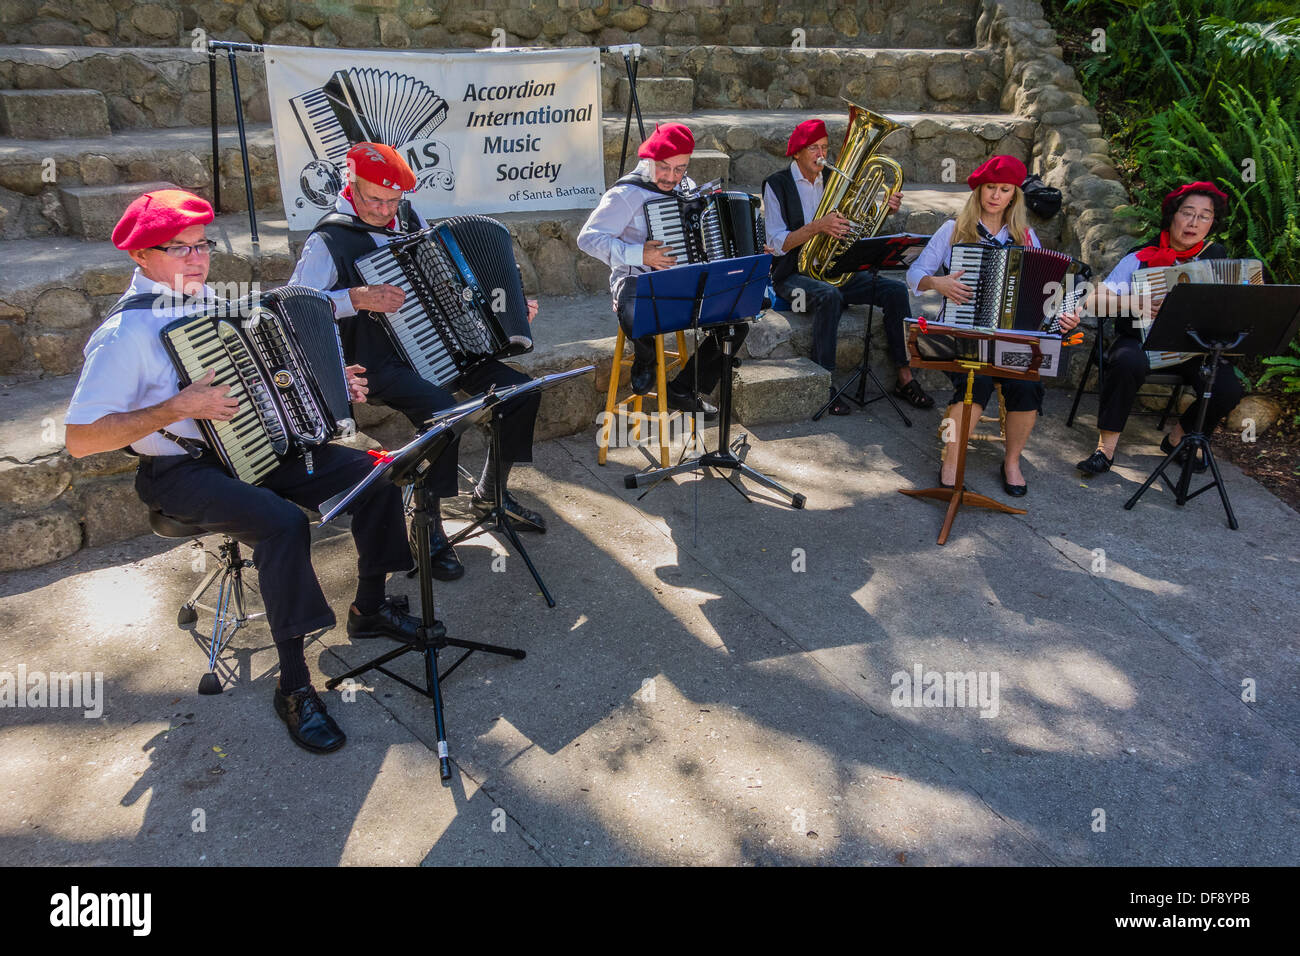 The Accordion International Musical Society playing outside and wearing red berets in Santa Barbara, California. Stock Photo